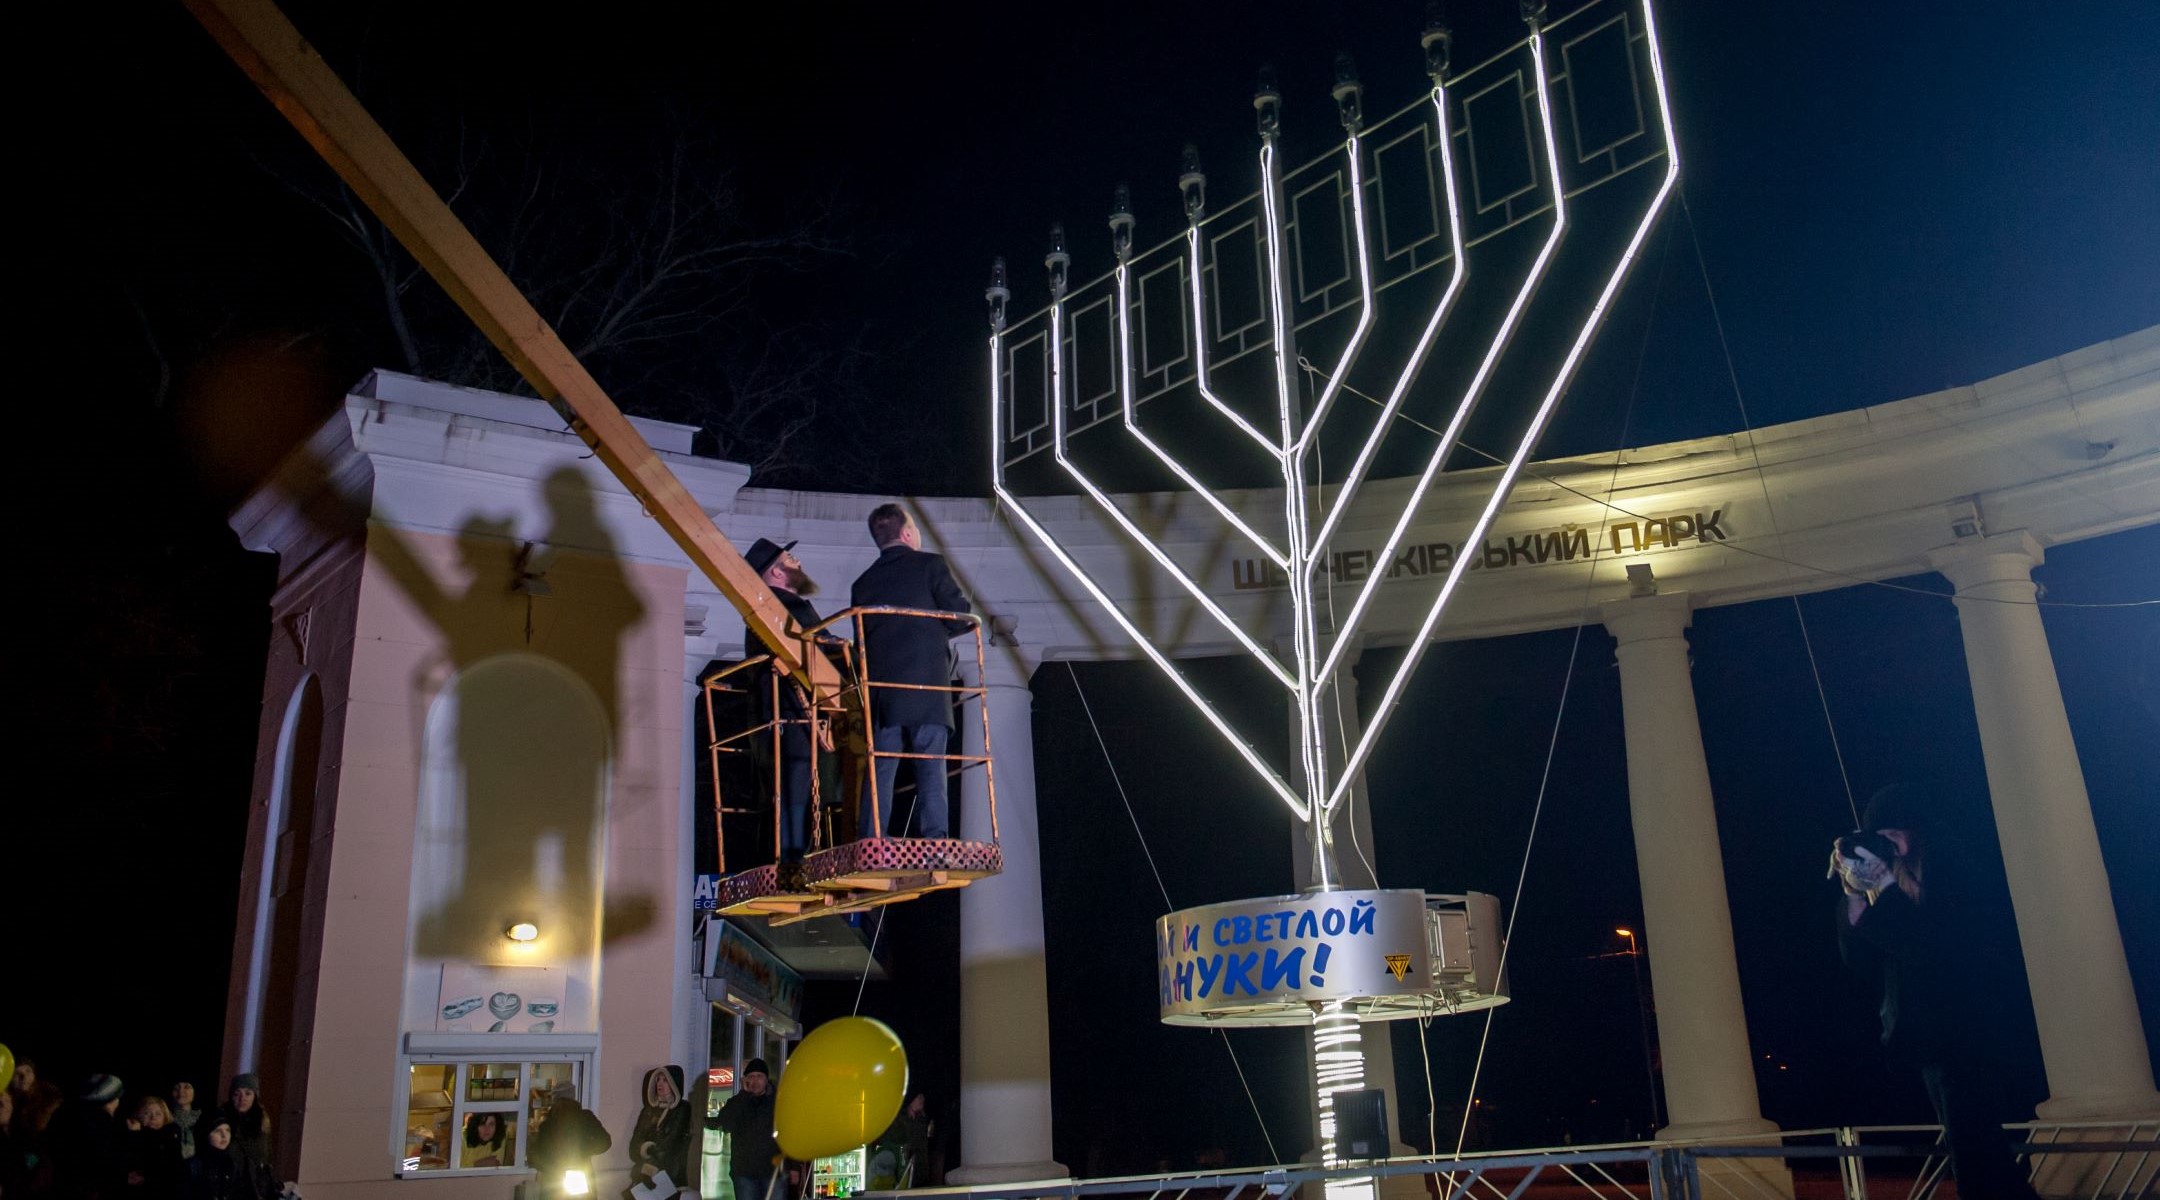 Rabbi Wolff lights a menorah in Kherson